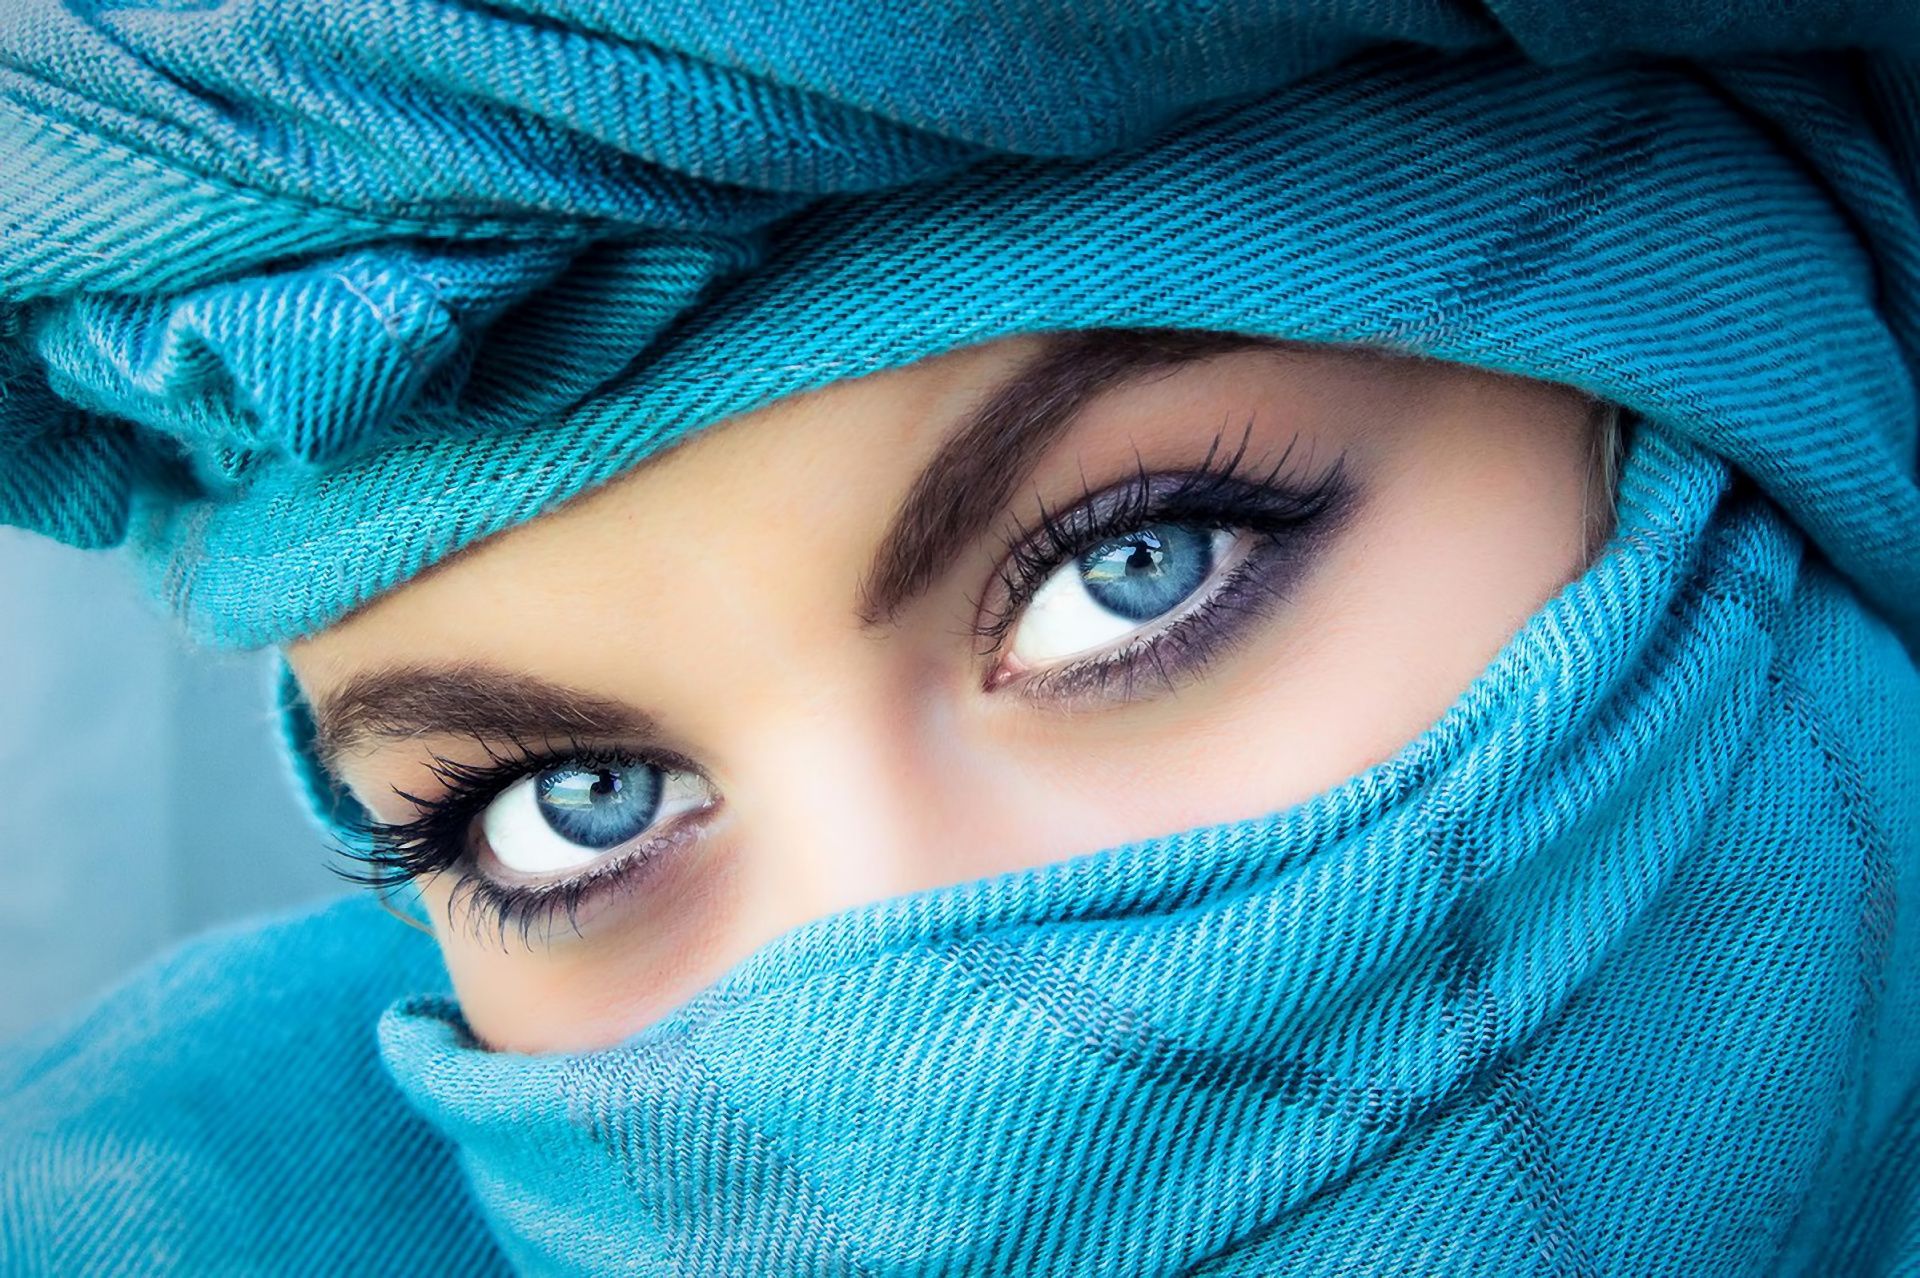 Wallpaper. Girls. photo. picture. girl, blue eyes, eyelashes, the burqa, beauty